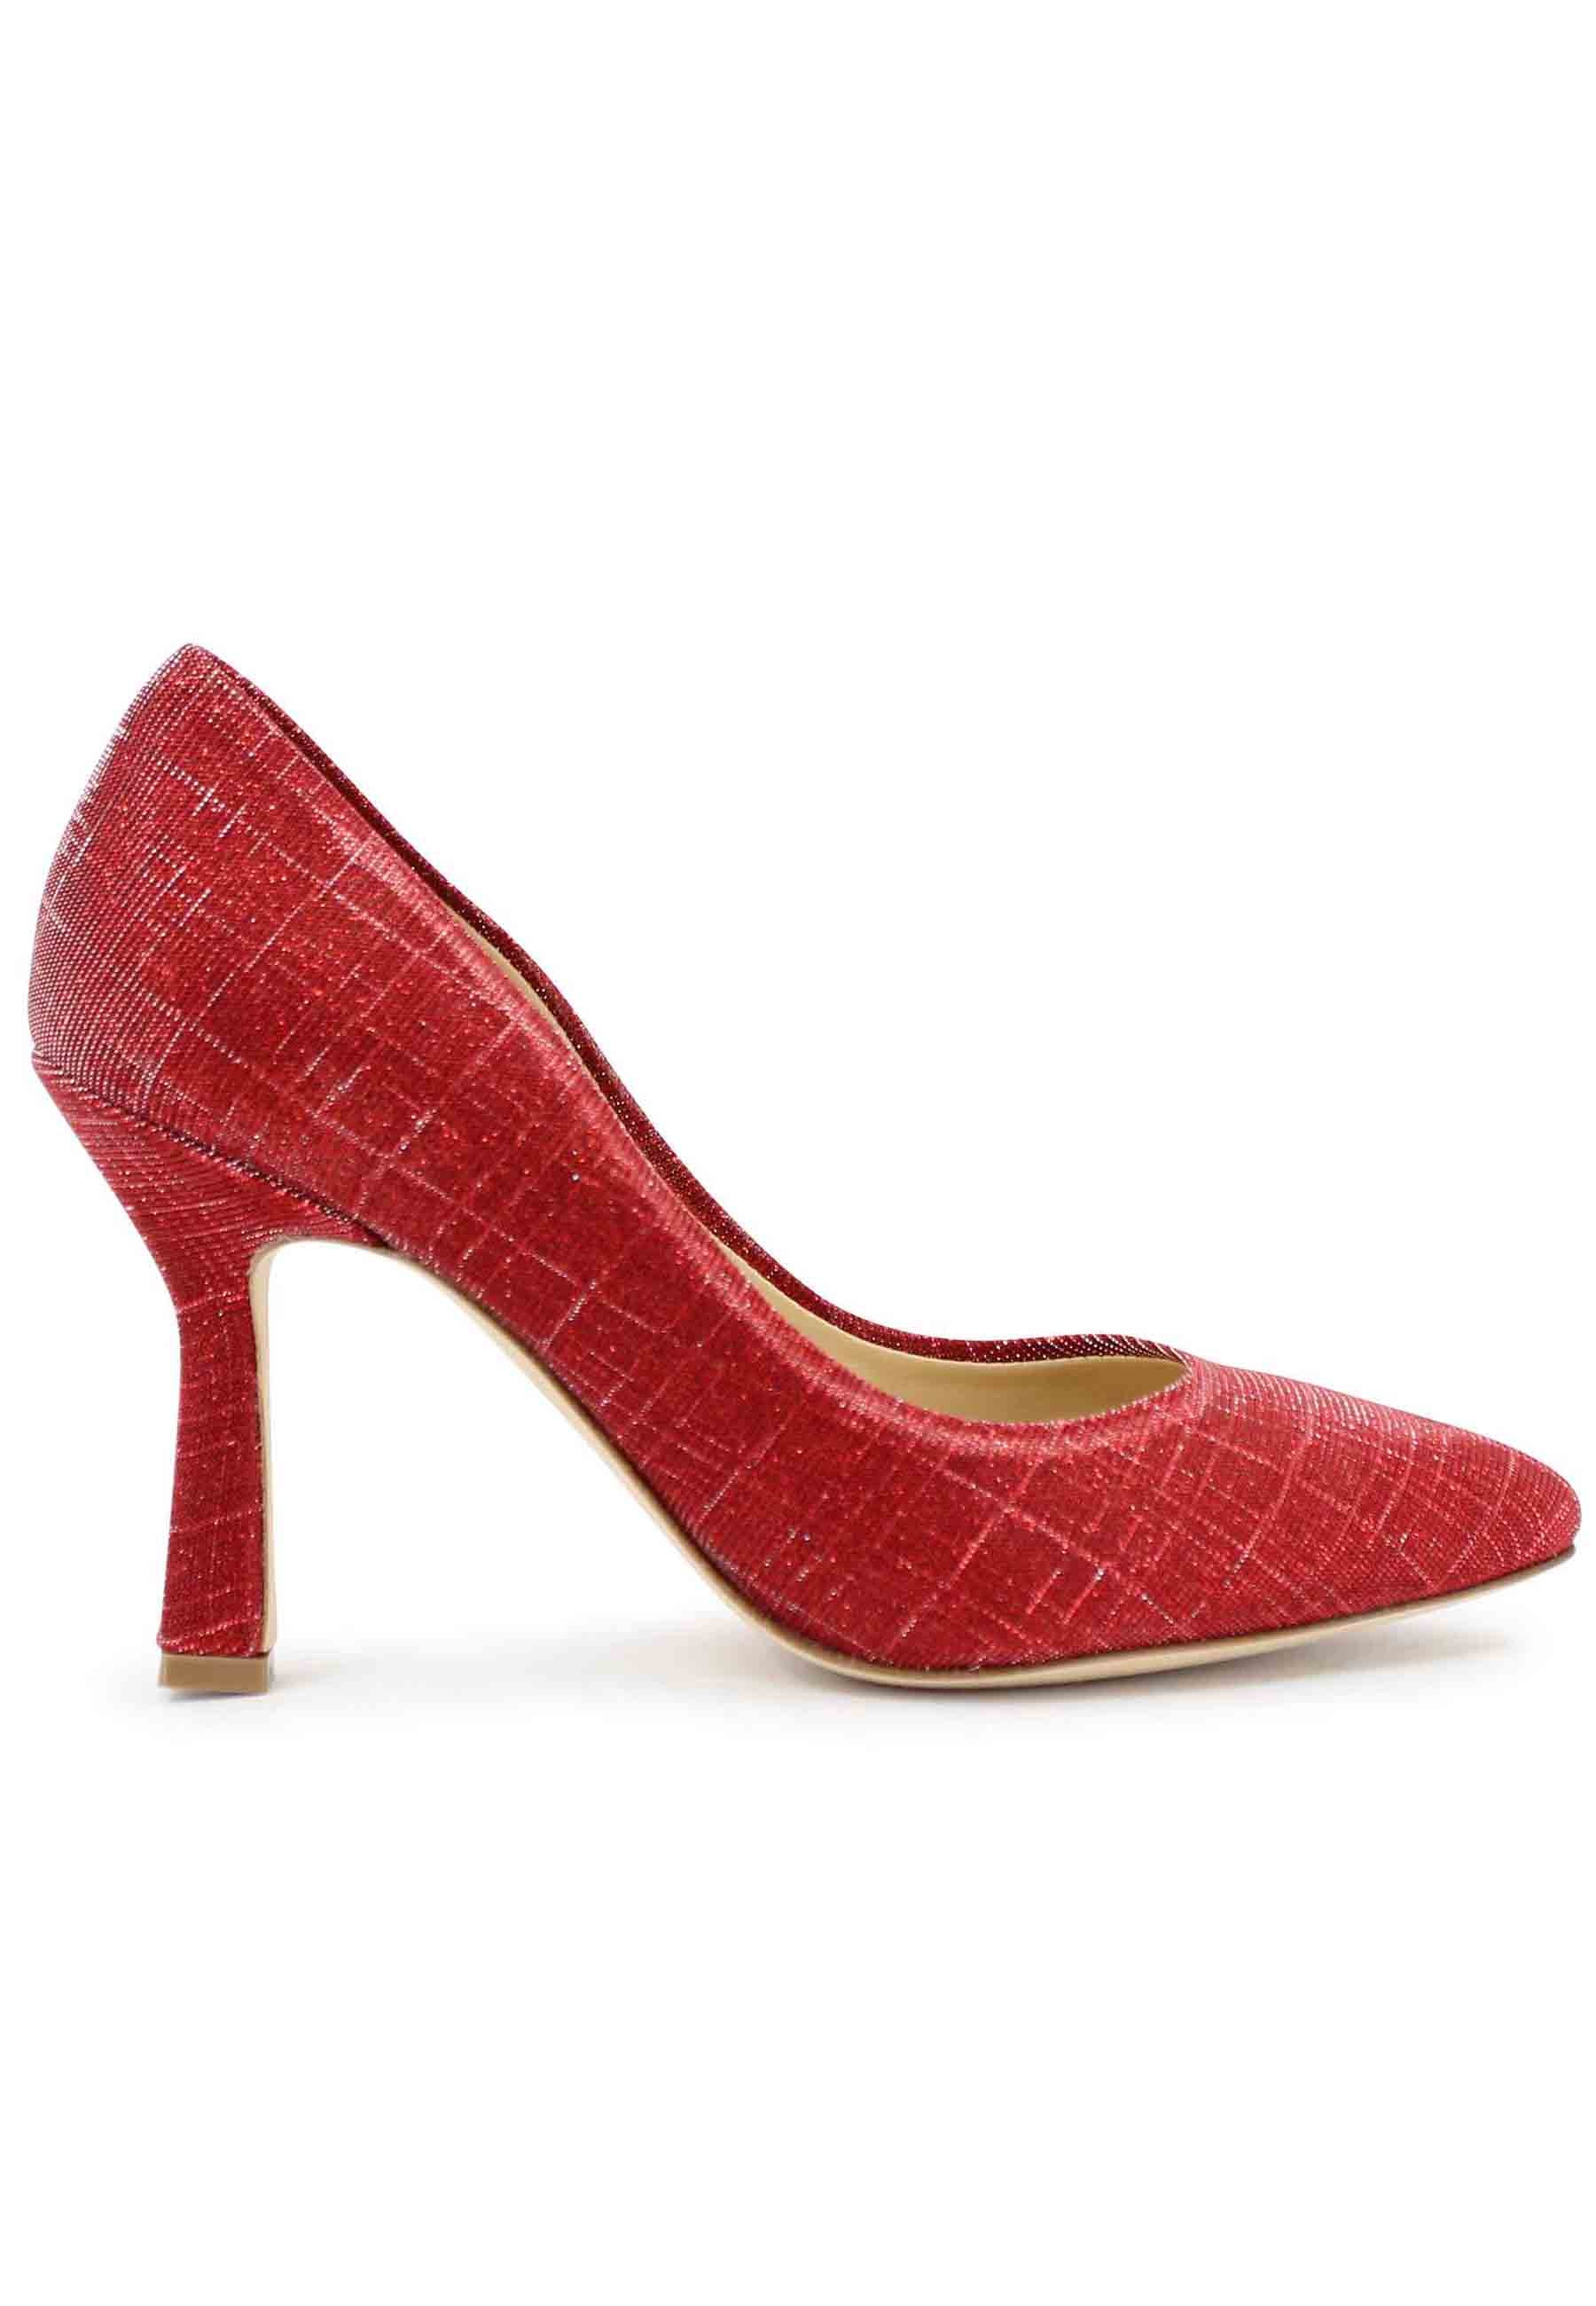 DE1002/RT women's pumps in red lux fabric with high heel